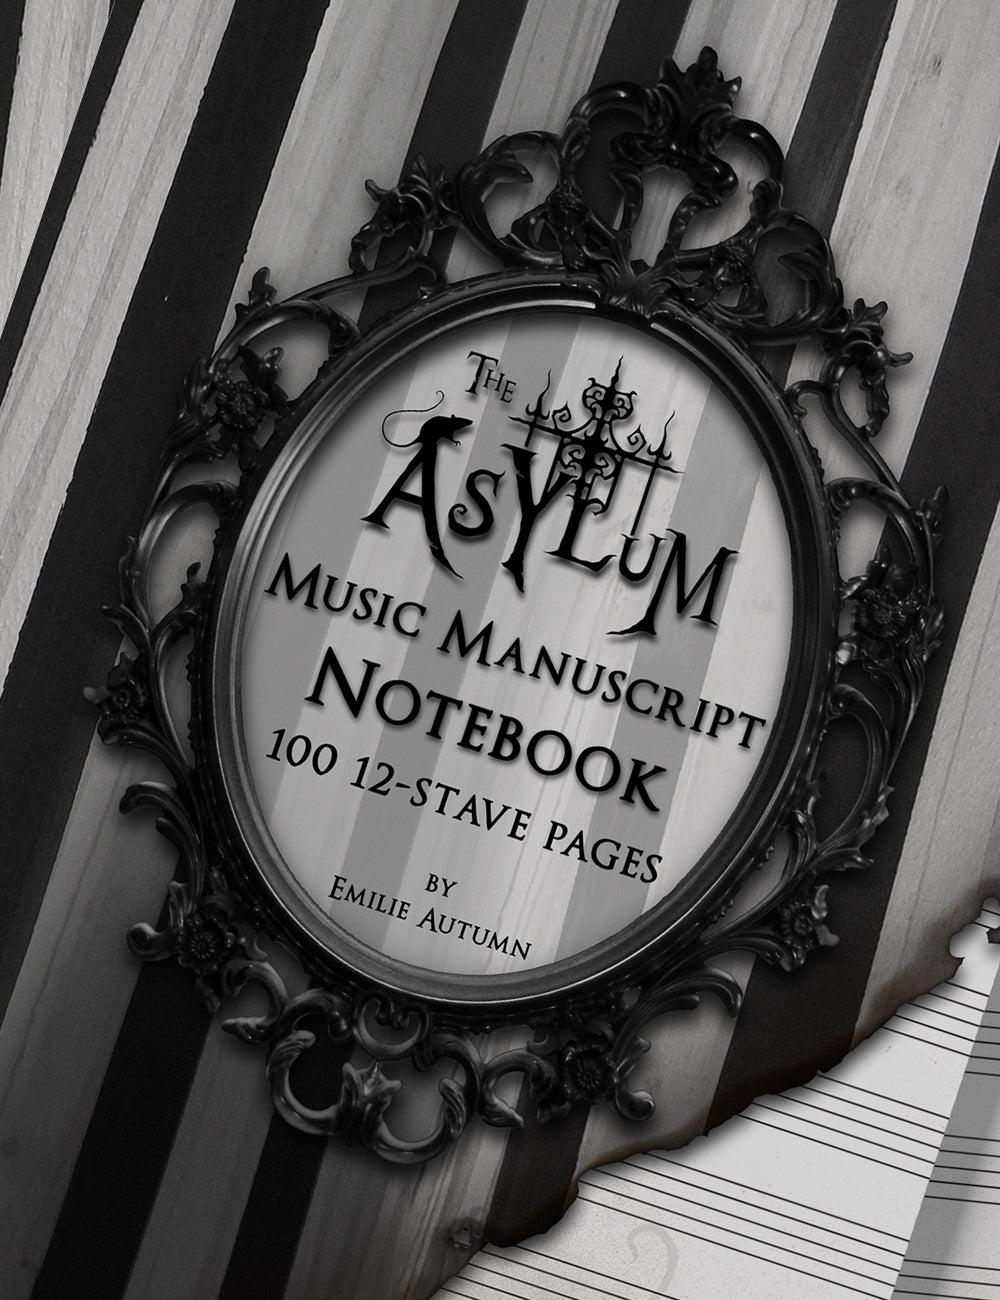 The Asylum Music Manuscript Notebook